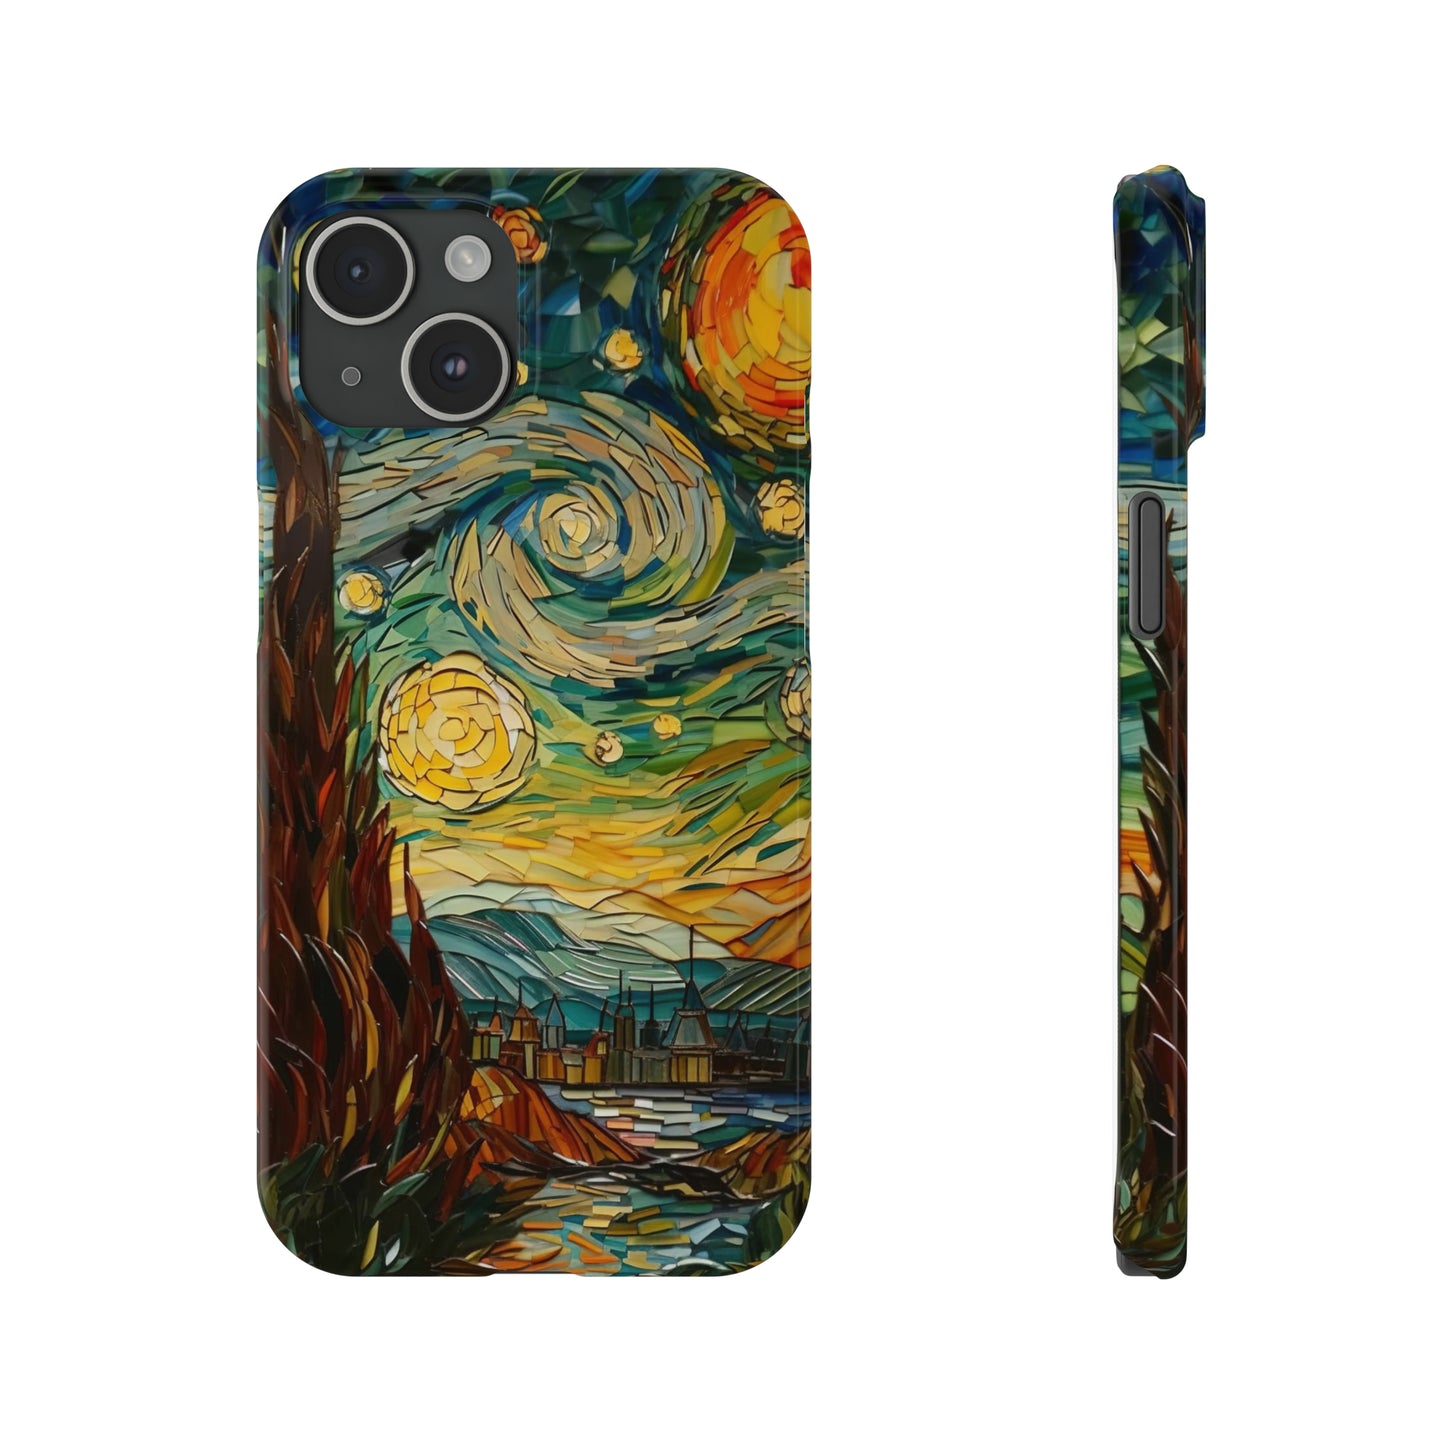 Landscape iPhone case